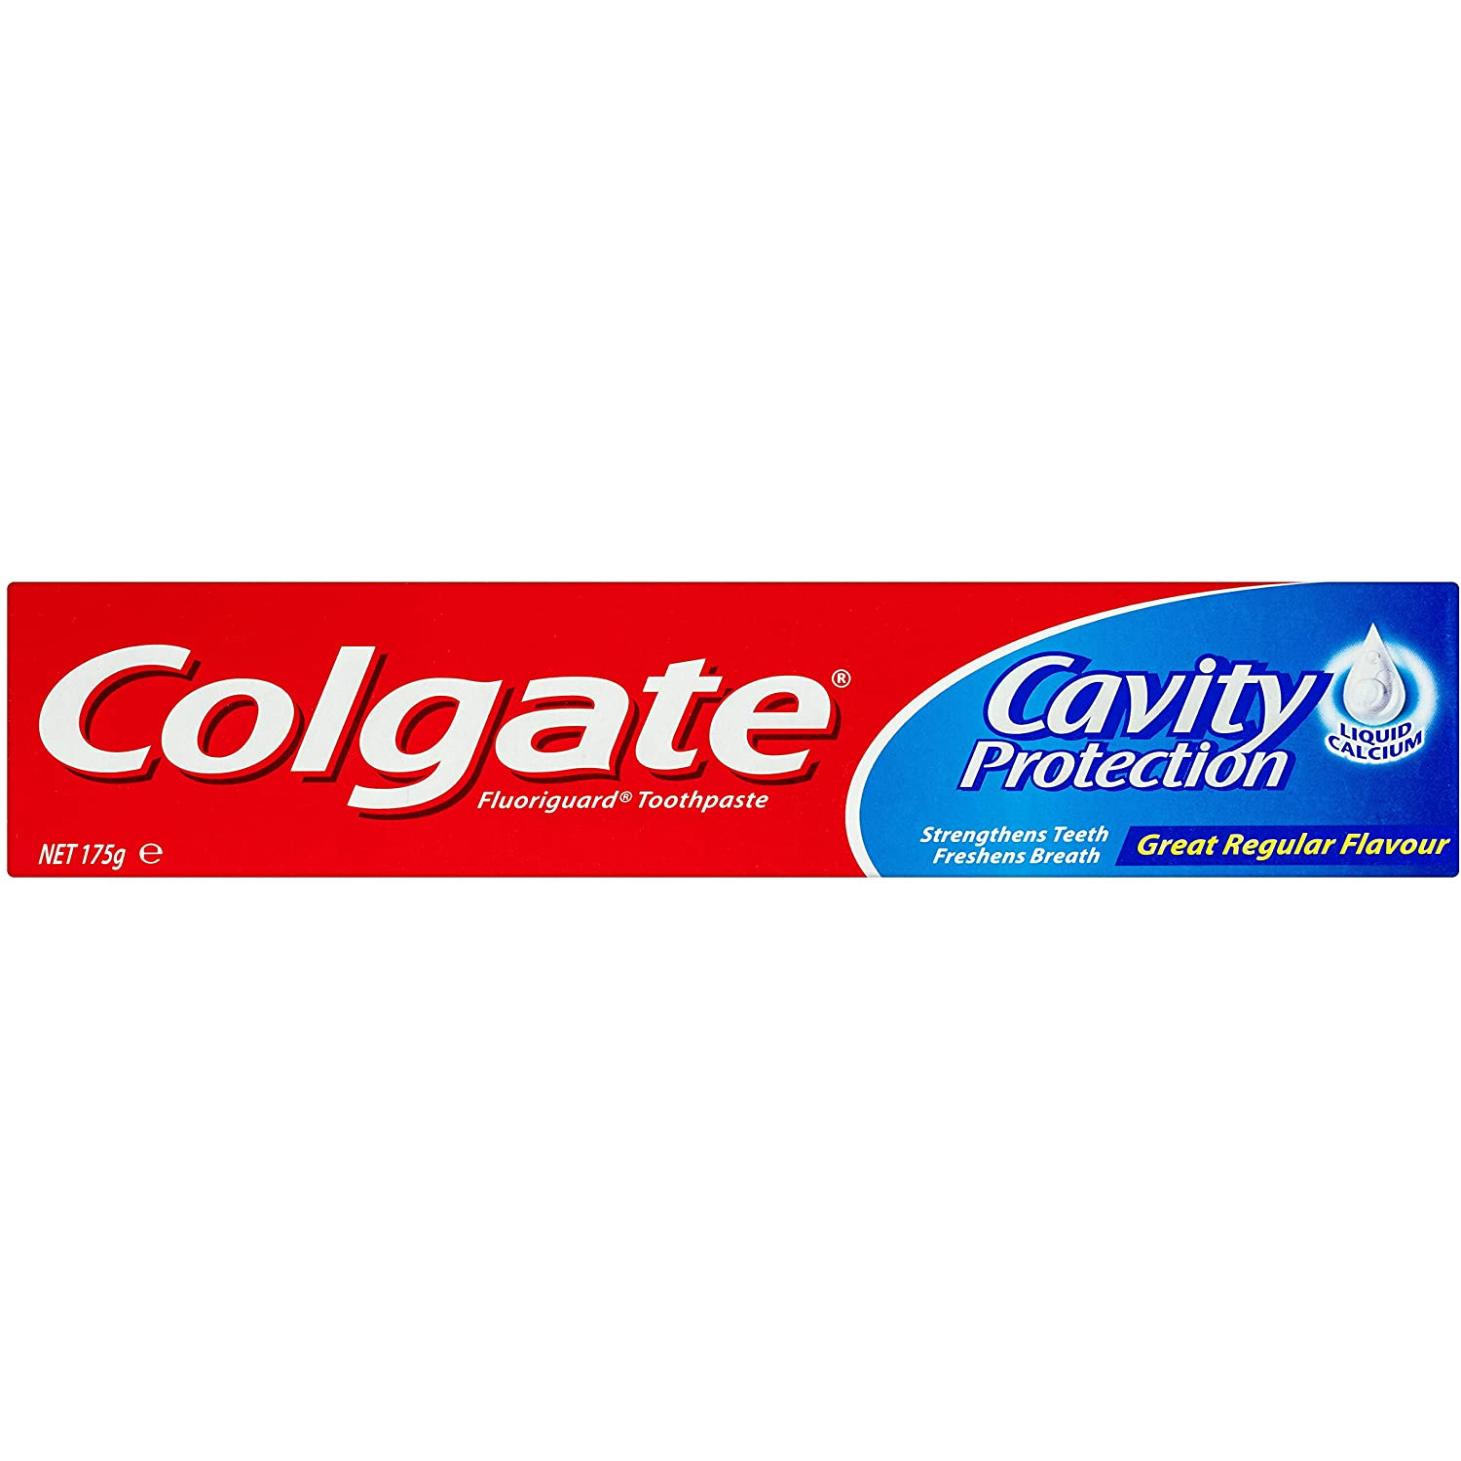 Colgate Maximum Cavity Protection Regular Flavour Toothpaste 172g